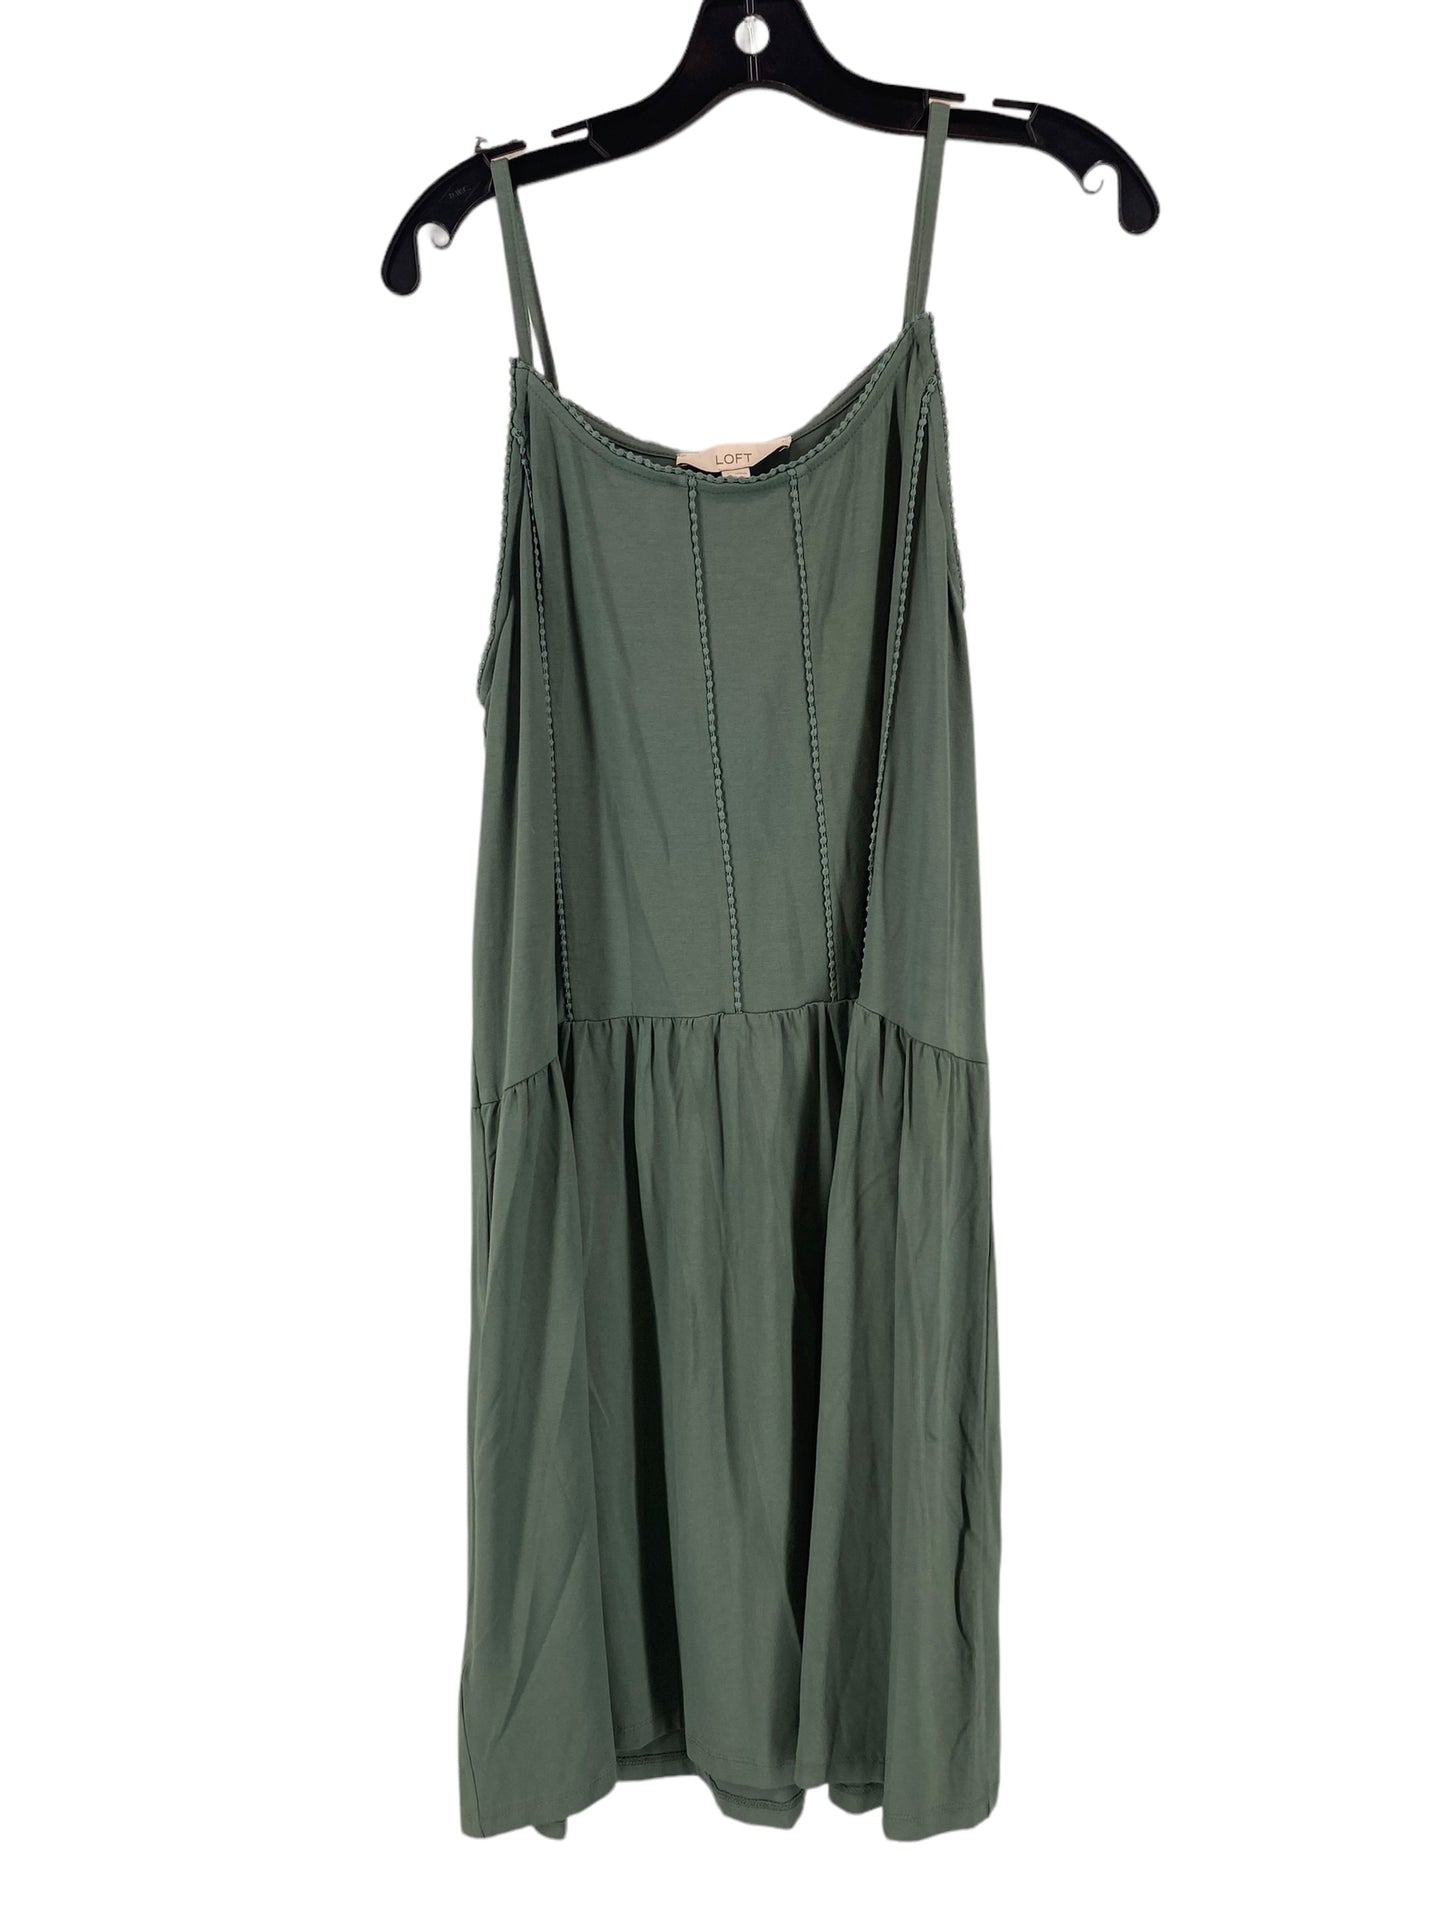 Dress Casual Short By Loft  Size: S